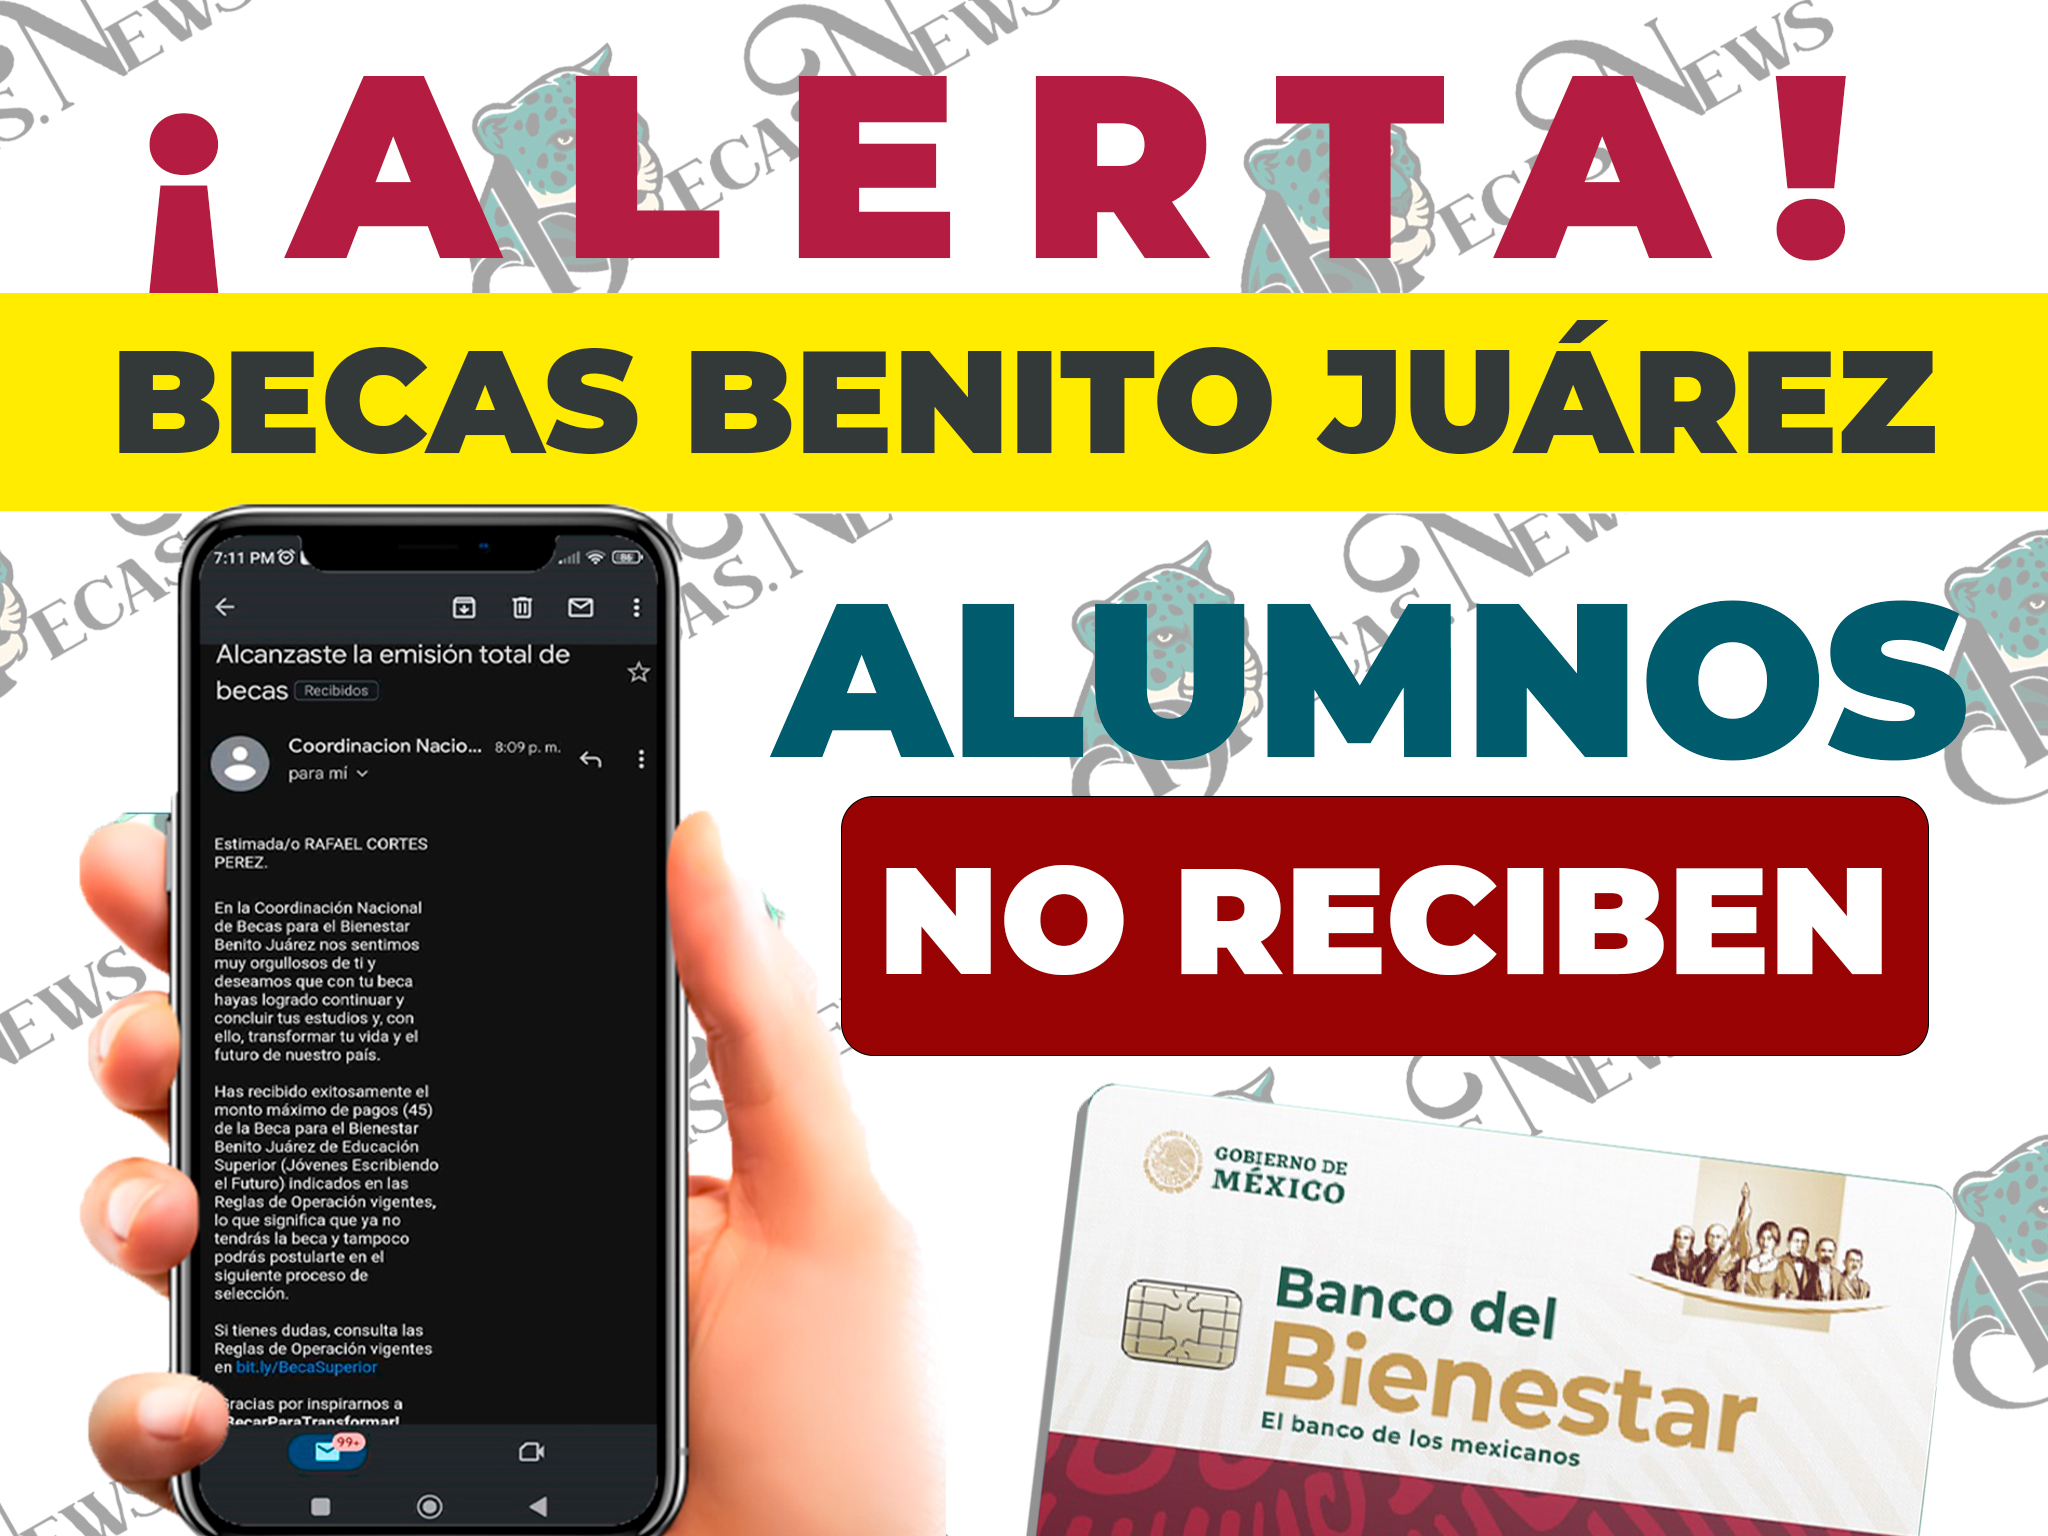 ¡Malas noticias!, Esta notificación llegará a tu correo dando fin a tu Beca| Infórmate: Becas Benito Juárez